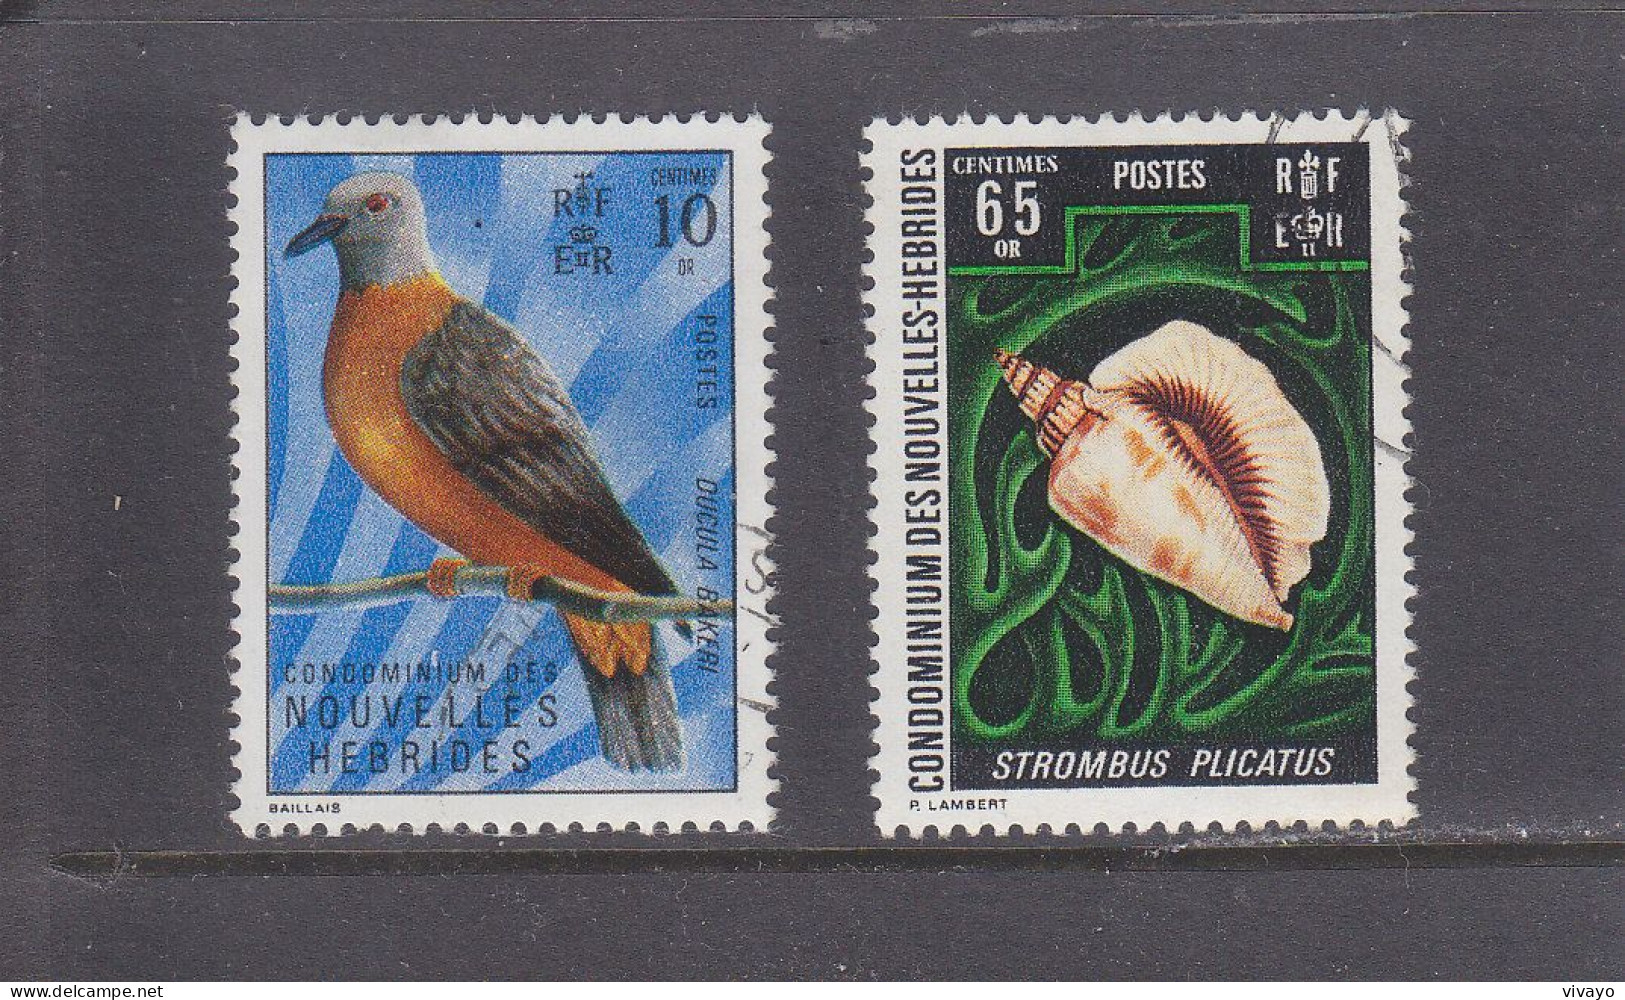 NEW HEBRIDES - NOUVELLES HEBRIDES - 1972 - O / FINE CANCELLED - BIRD & SHELL - Yv. 327, 333 - Mi. 336, 342 - Used Stamps